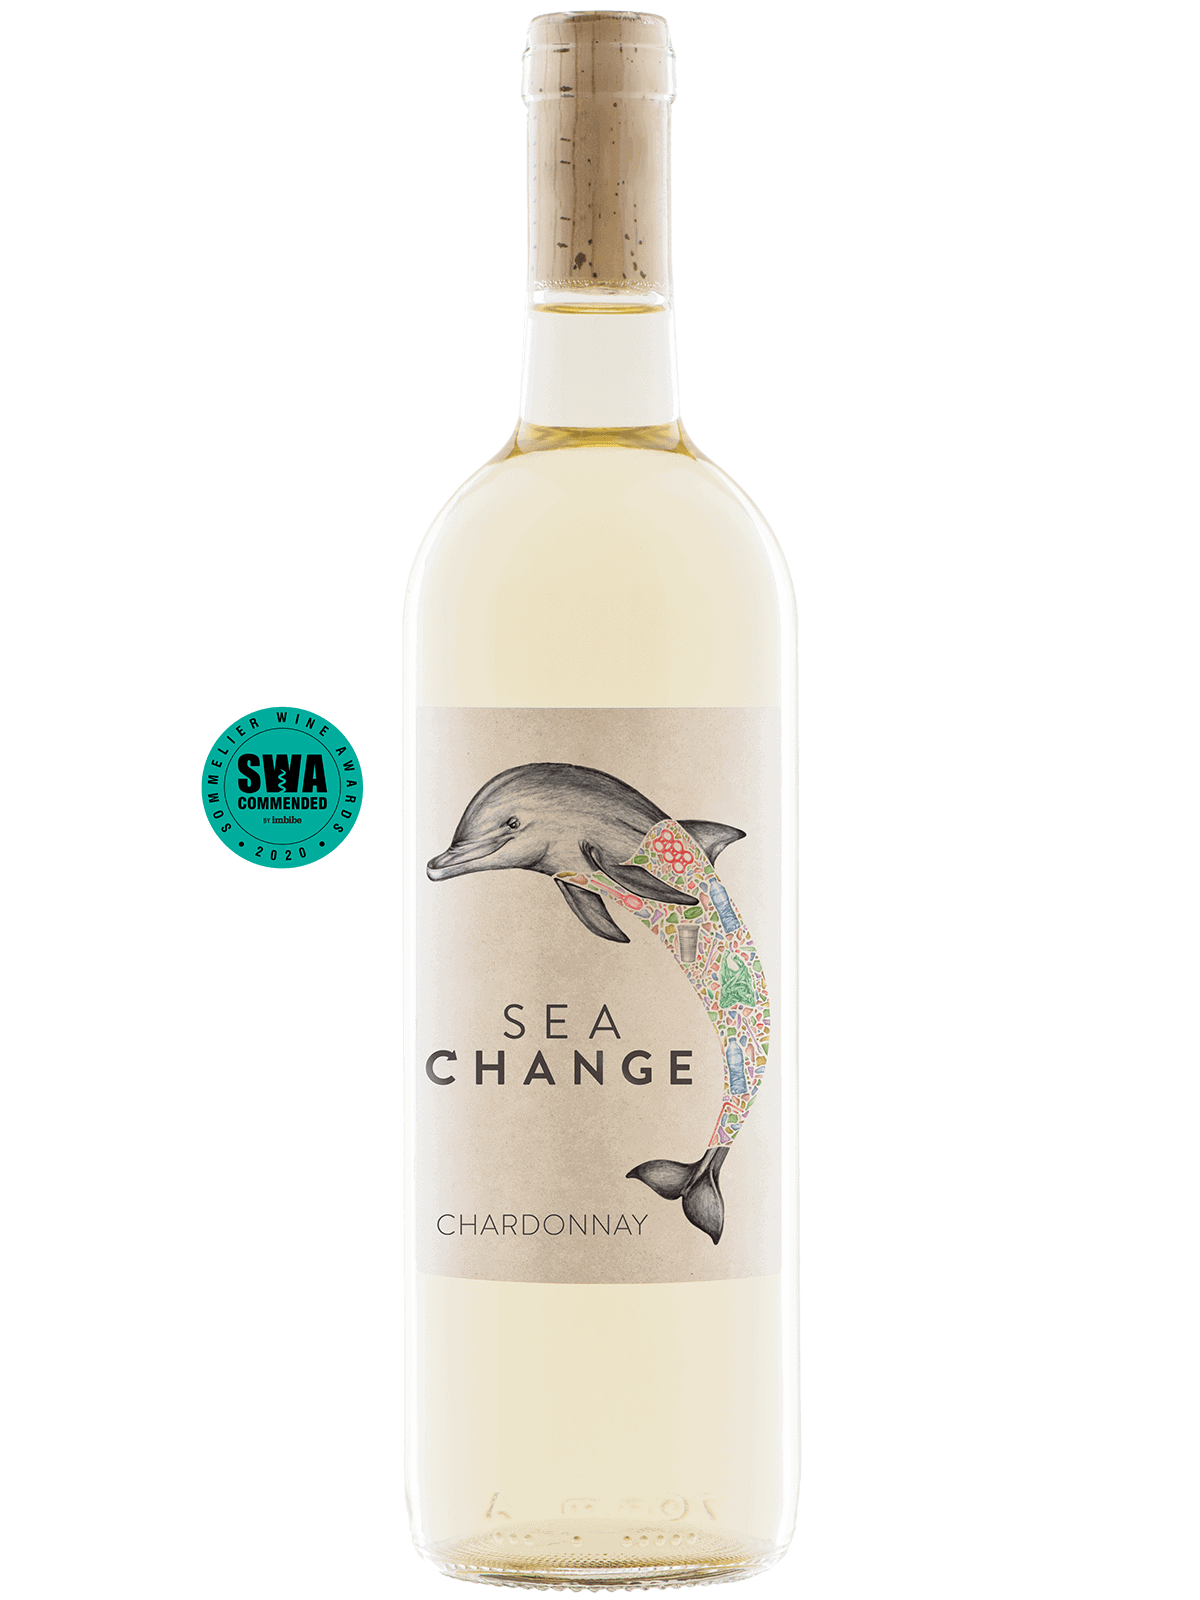 Seachange Chardonnay